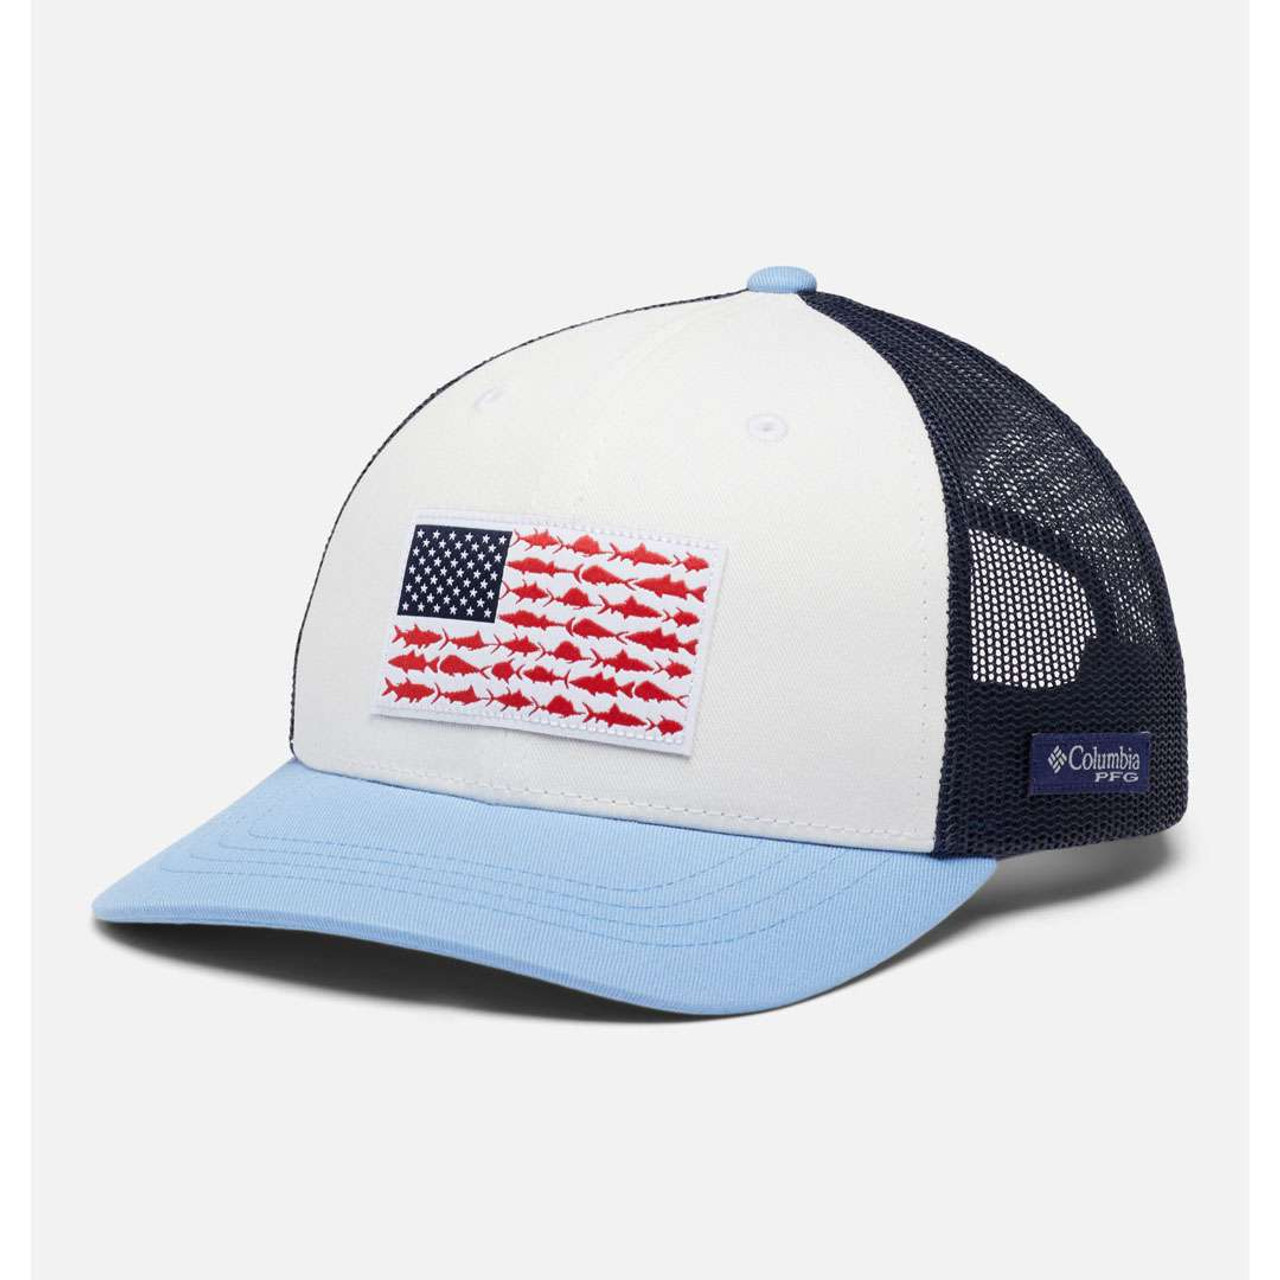 Buy American Fish Flag Hat Fishing Hat - Adjustable Outdoor Mesh